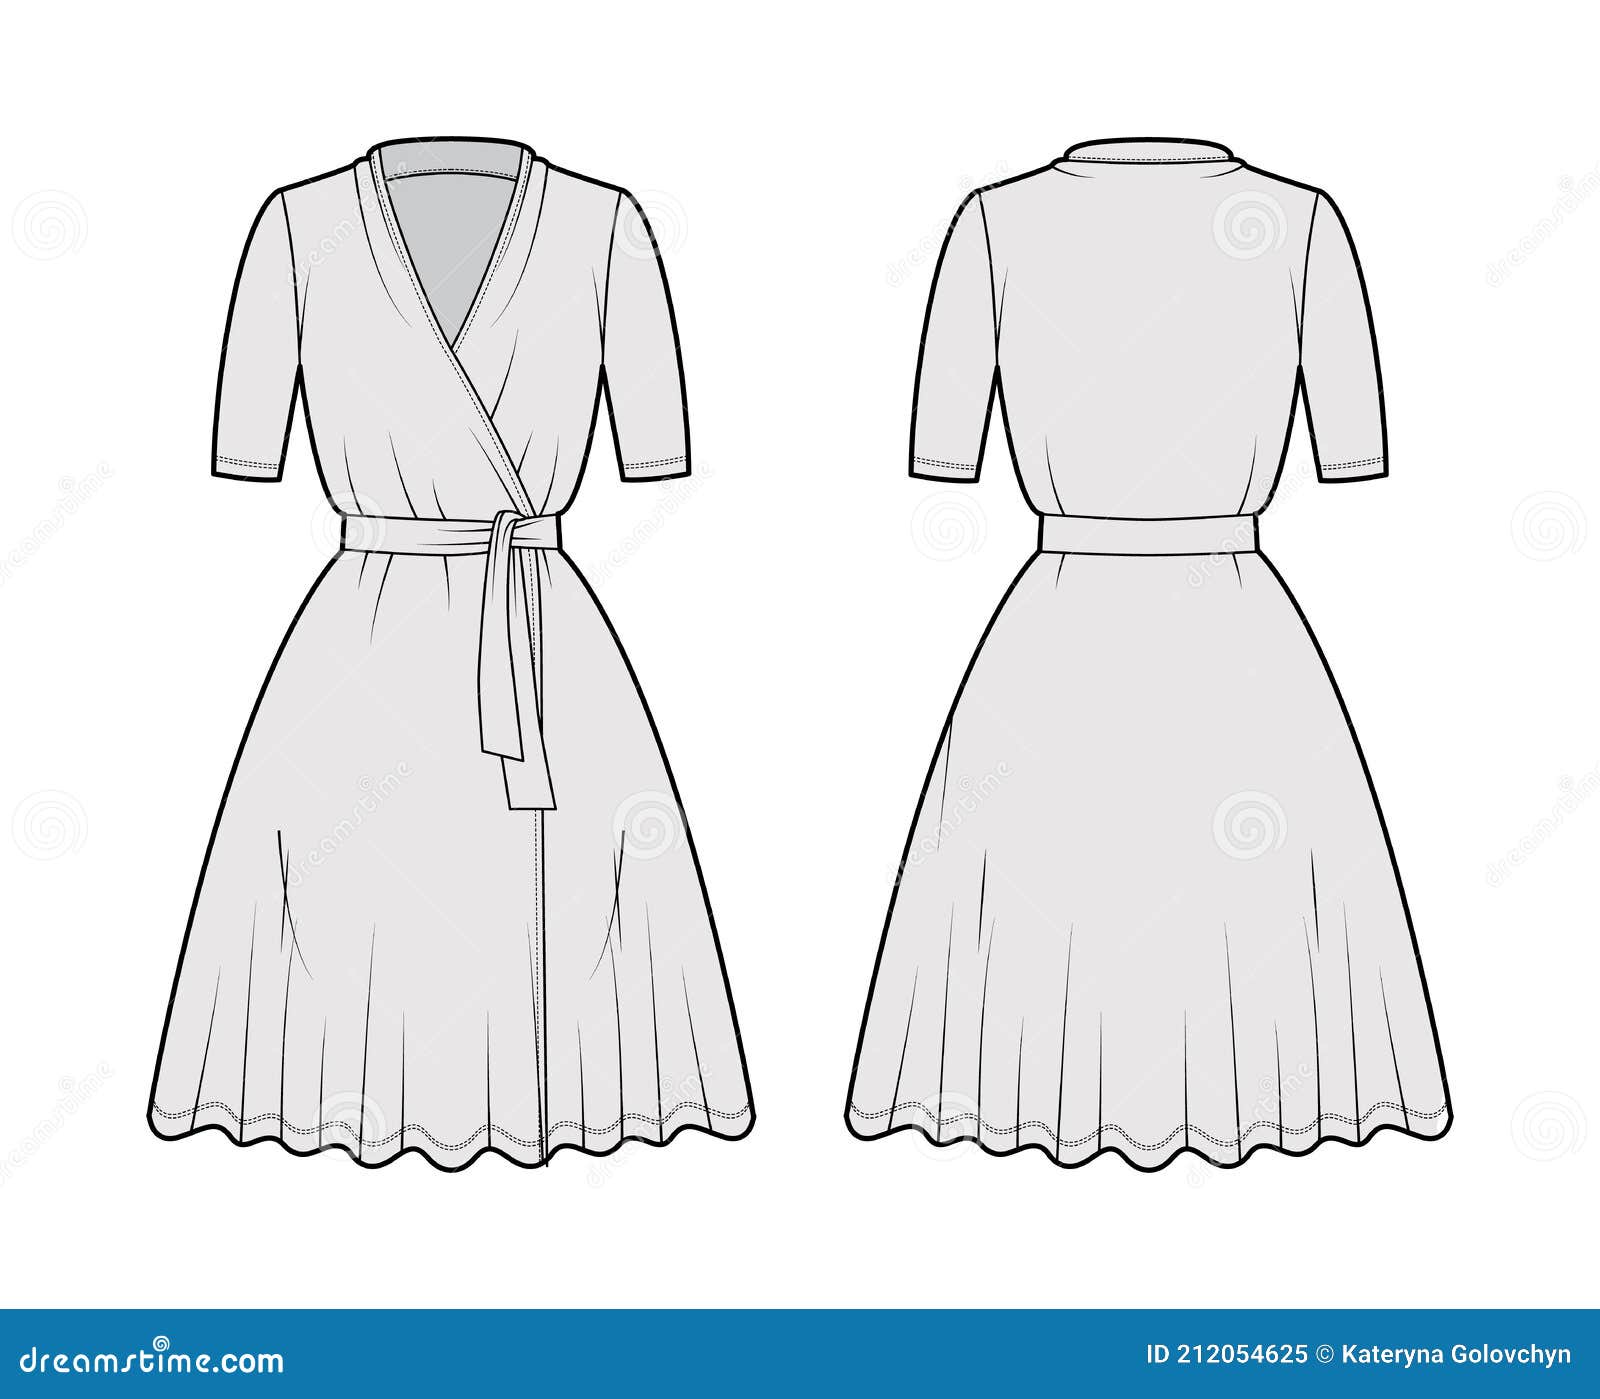 Wrap Dress Technical Fashion Illustration with Deep V-neck, Short ...